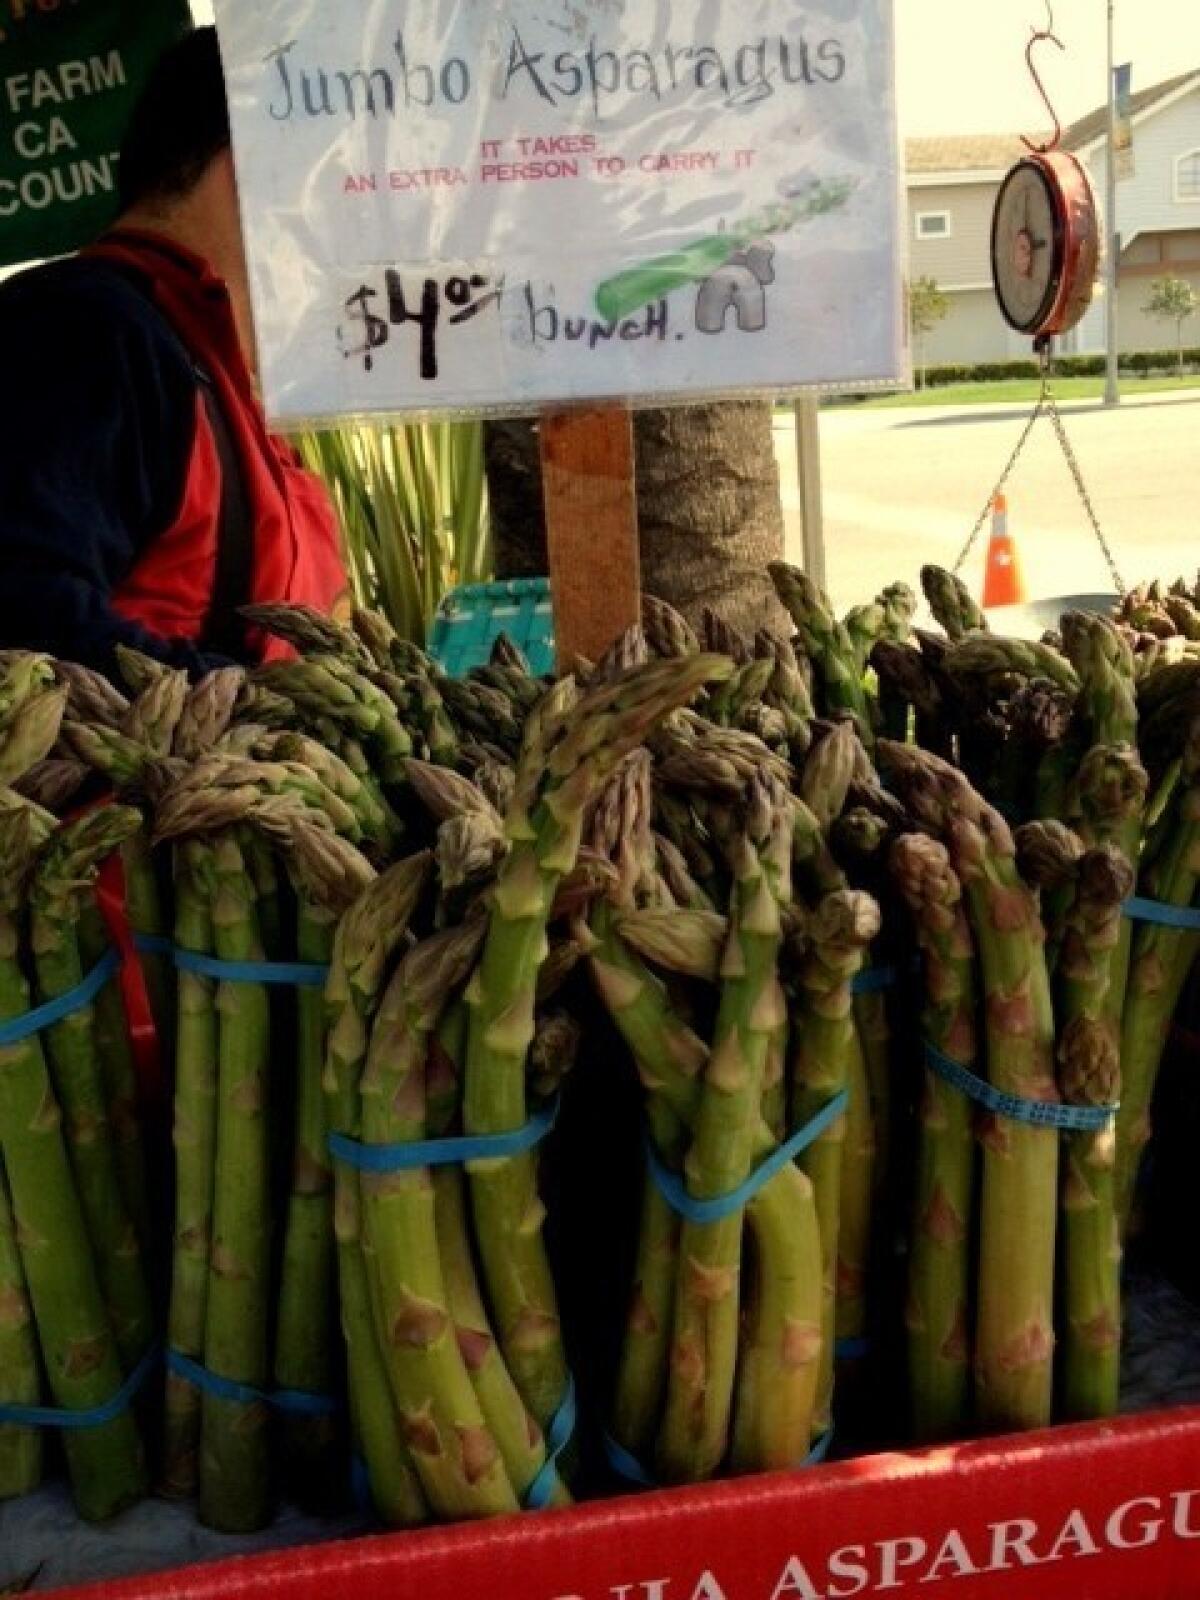 Jumbo asparagus at Zuckerman Farms.